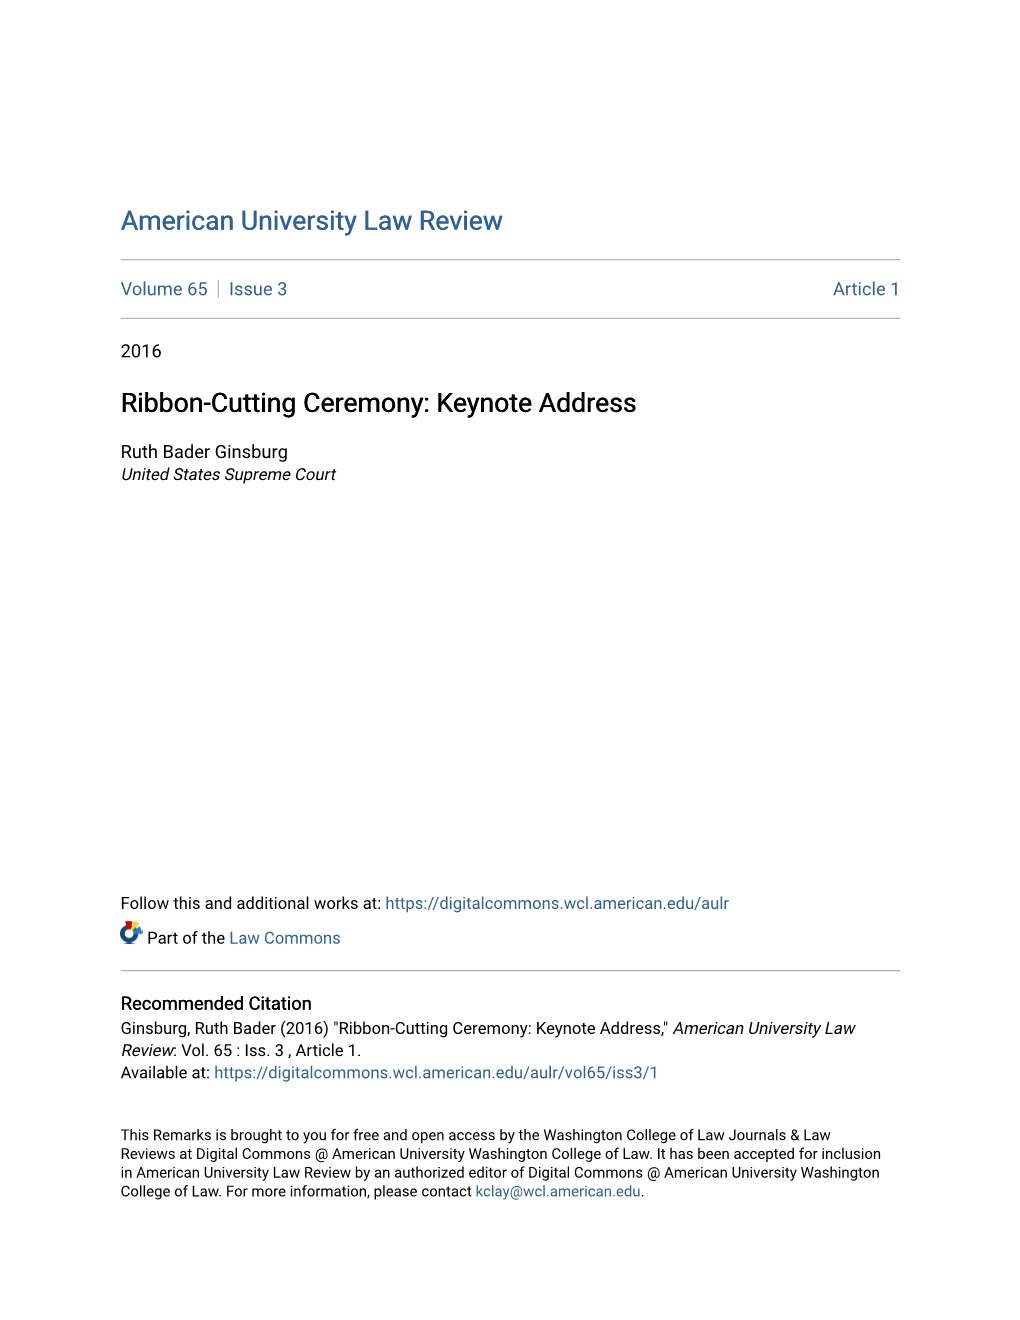 Ribbon-Cutting Ceremony: Keynote Address